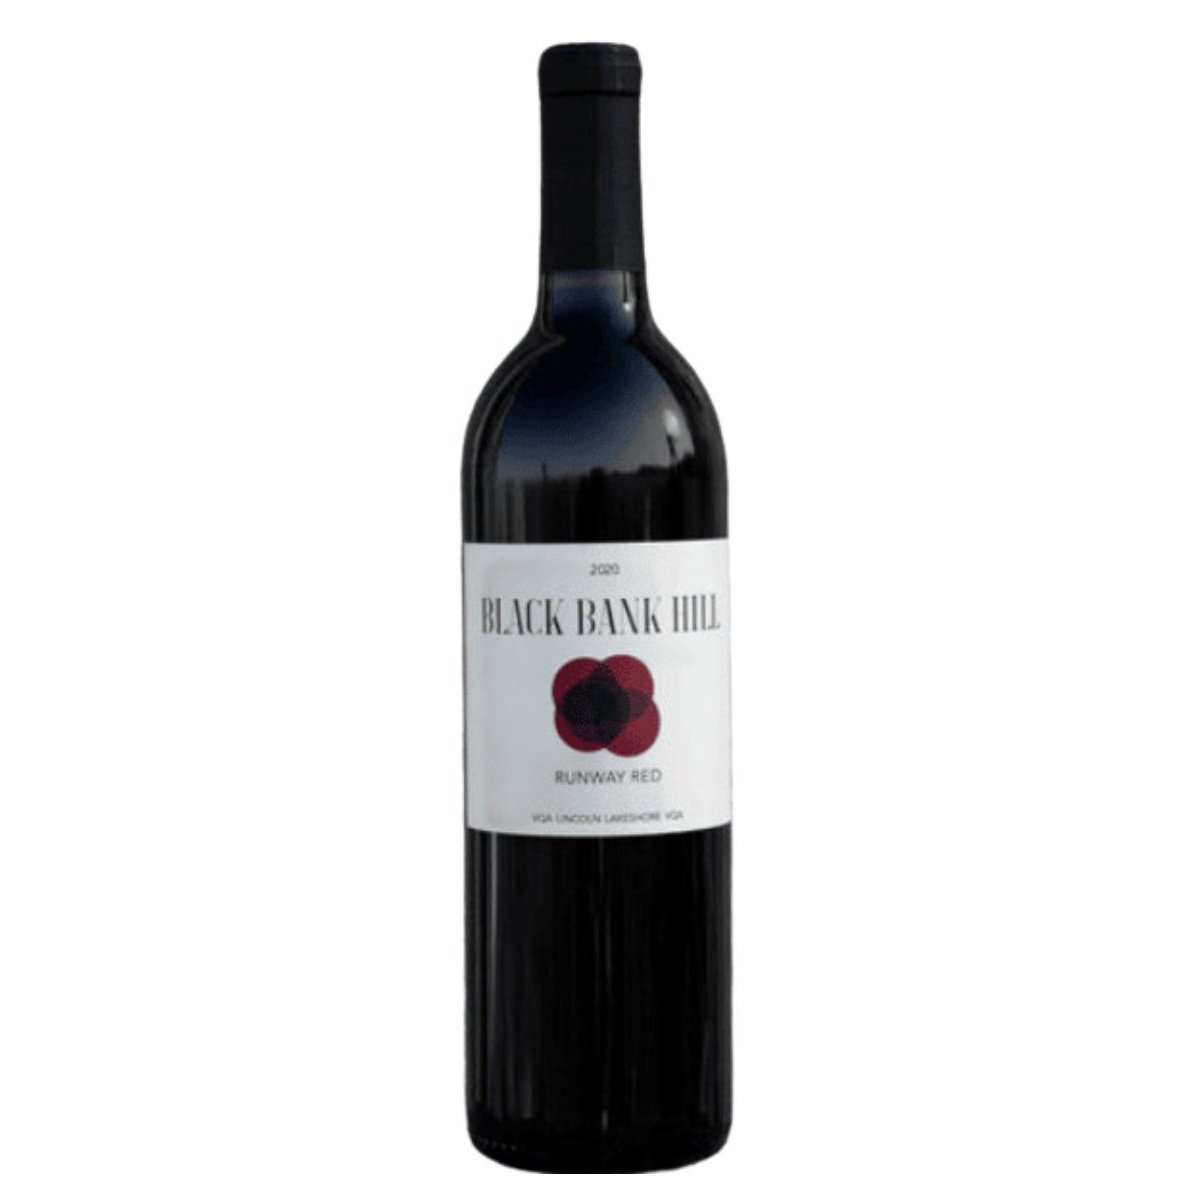 2020 Black Bank Hill “Runway” Red - Carl's Wine Club